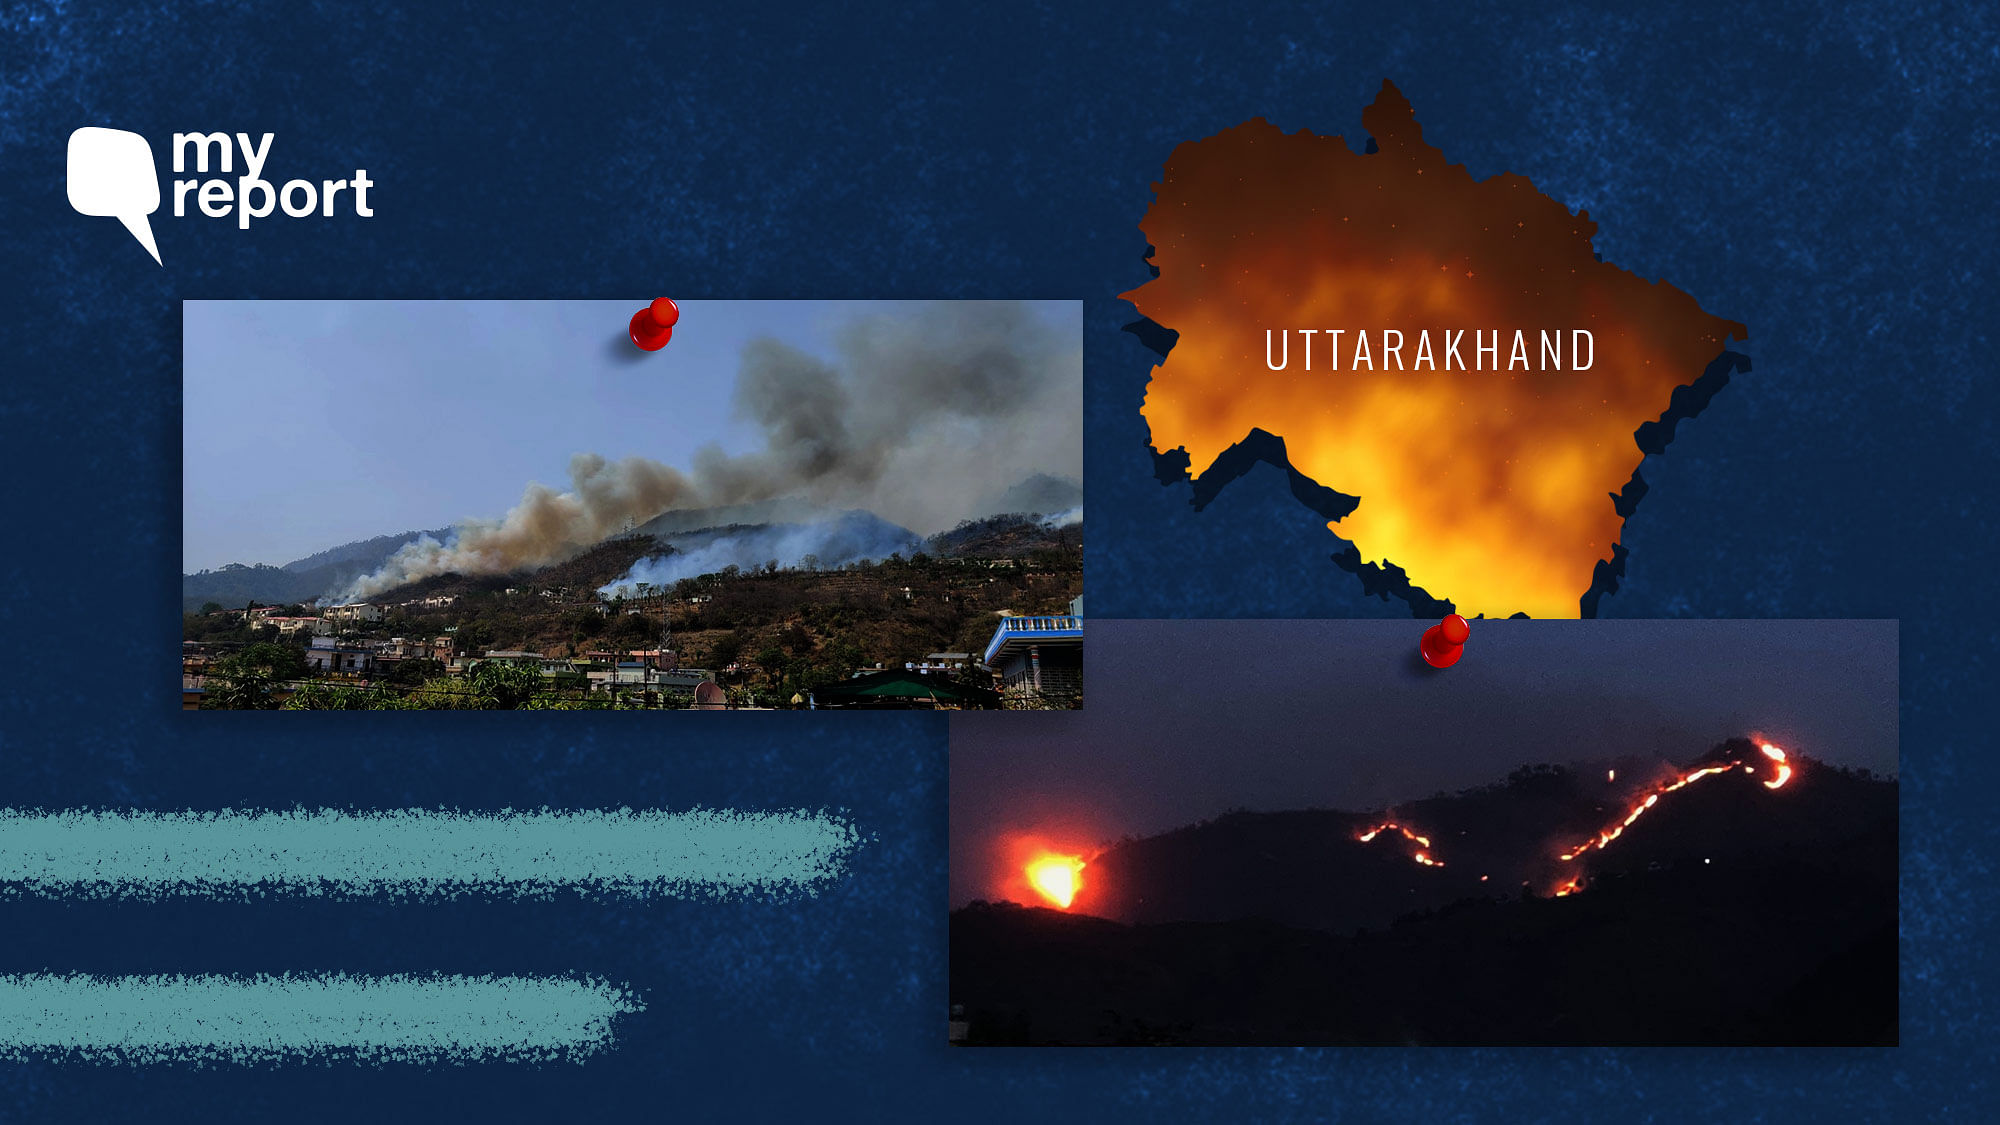 Himani Nautiyal, a local reports from Uttarakhand